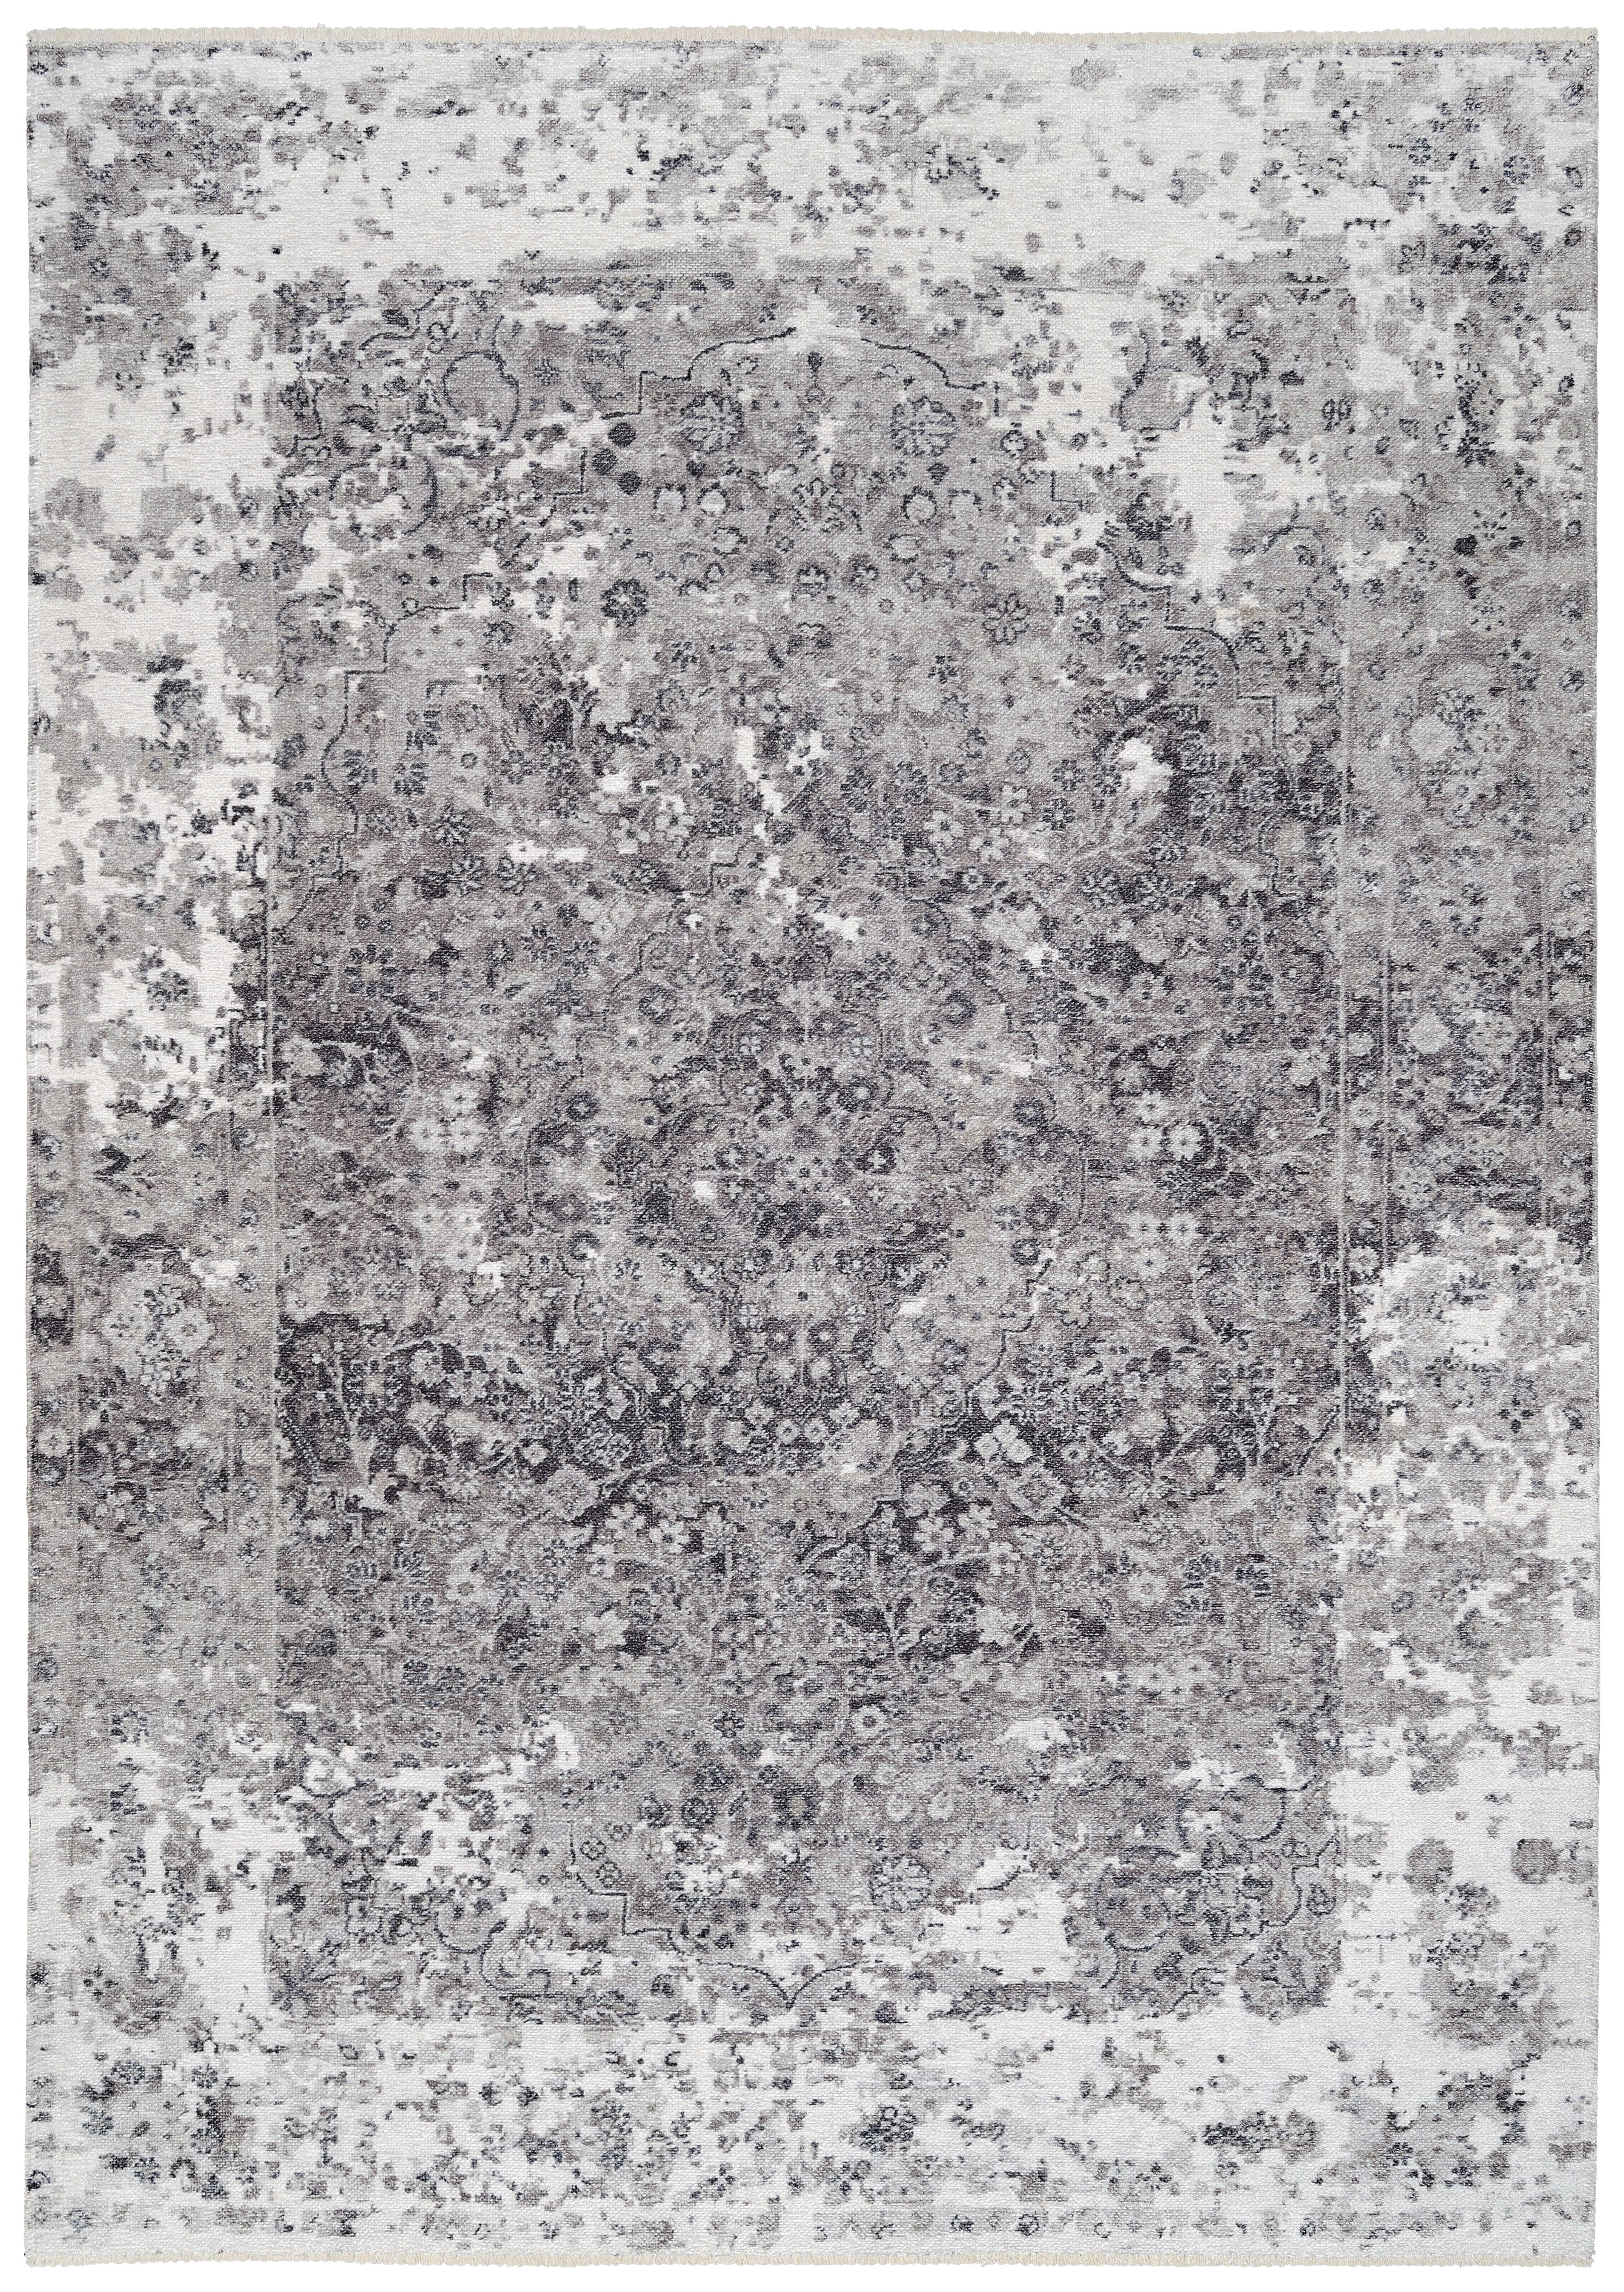 WEBTEPPICH  140/190 cm  Grau, Silberfarben   - Silberfarben/Grau, Design, Textil (140/190cm) - Novel